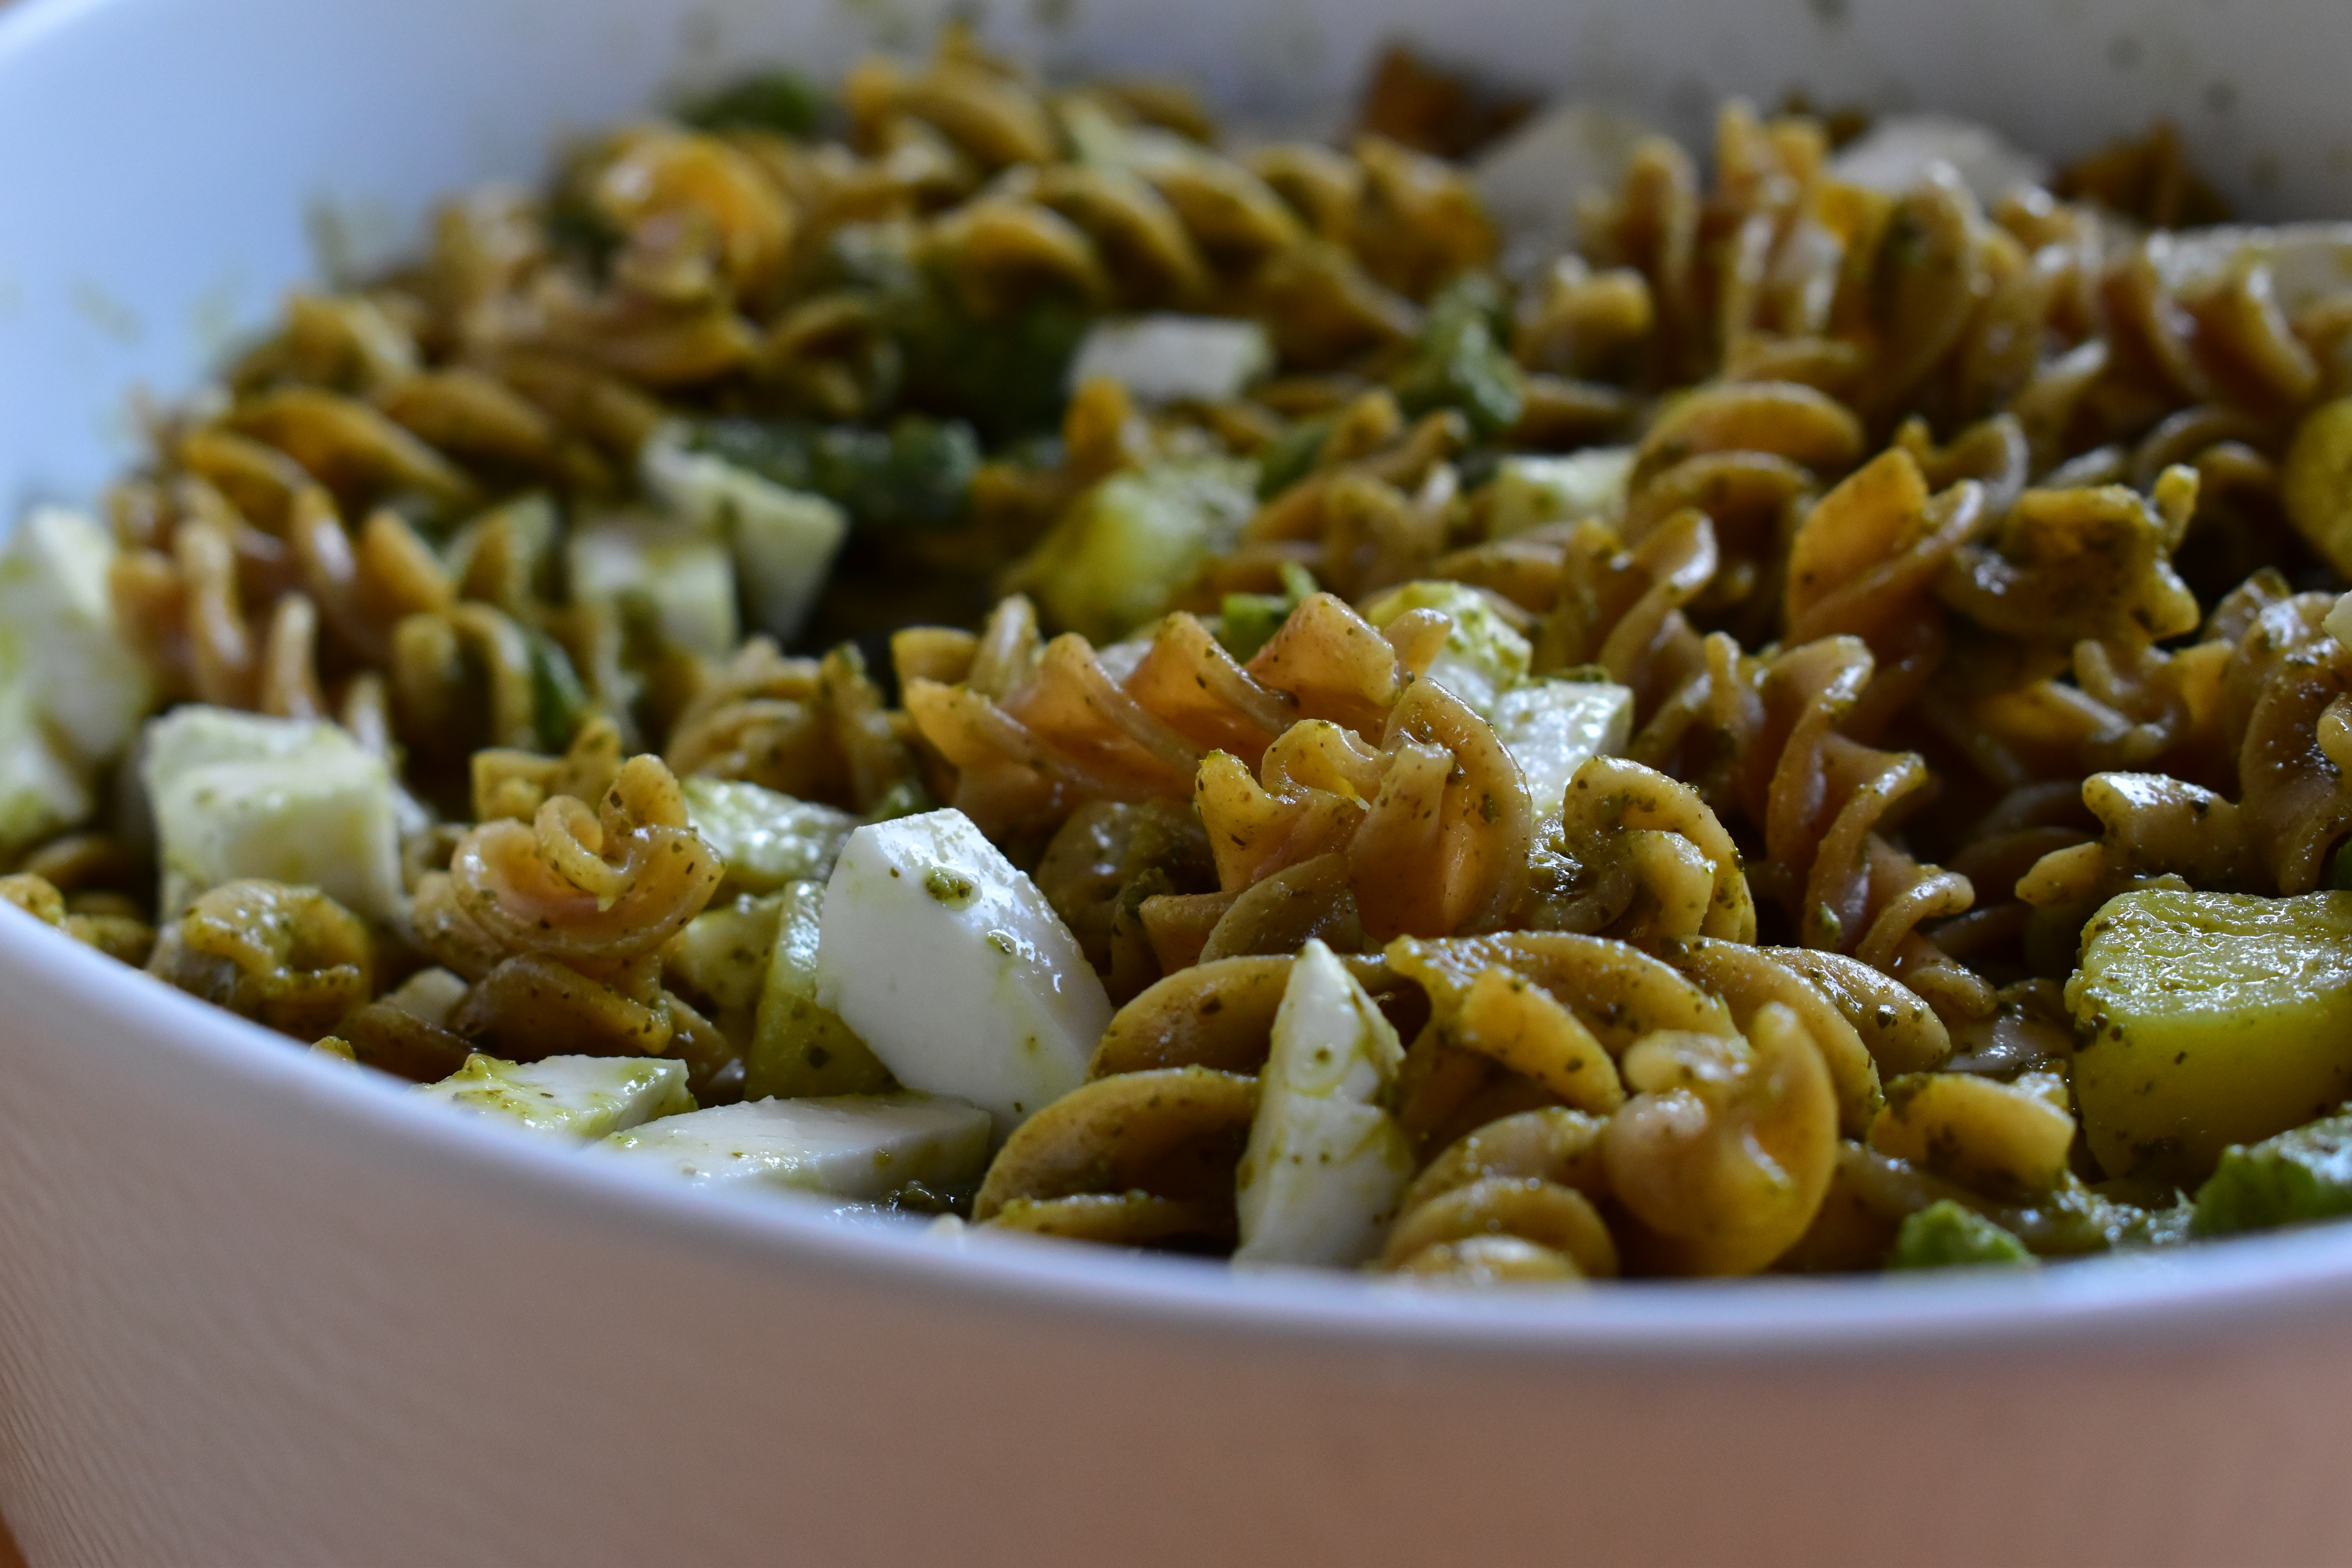 Pesto pasta salad with potatoes, mozzarella and green beans